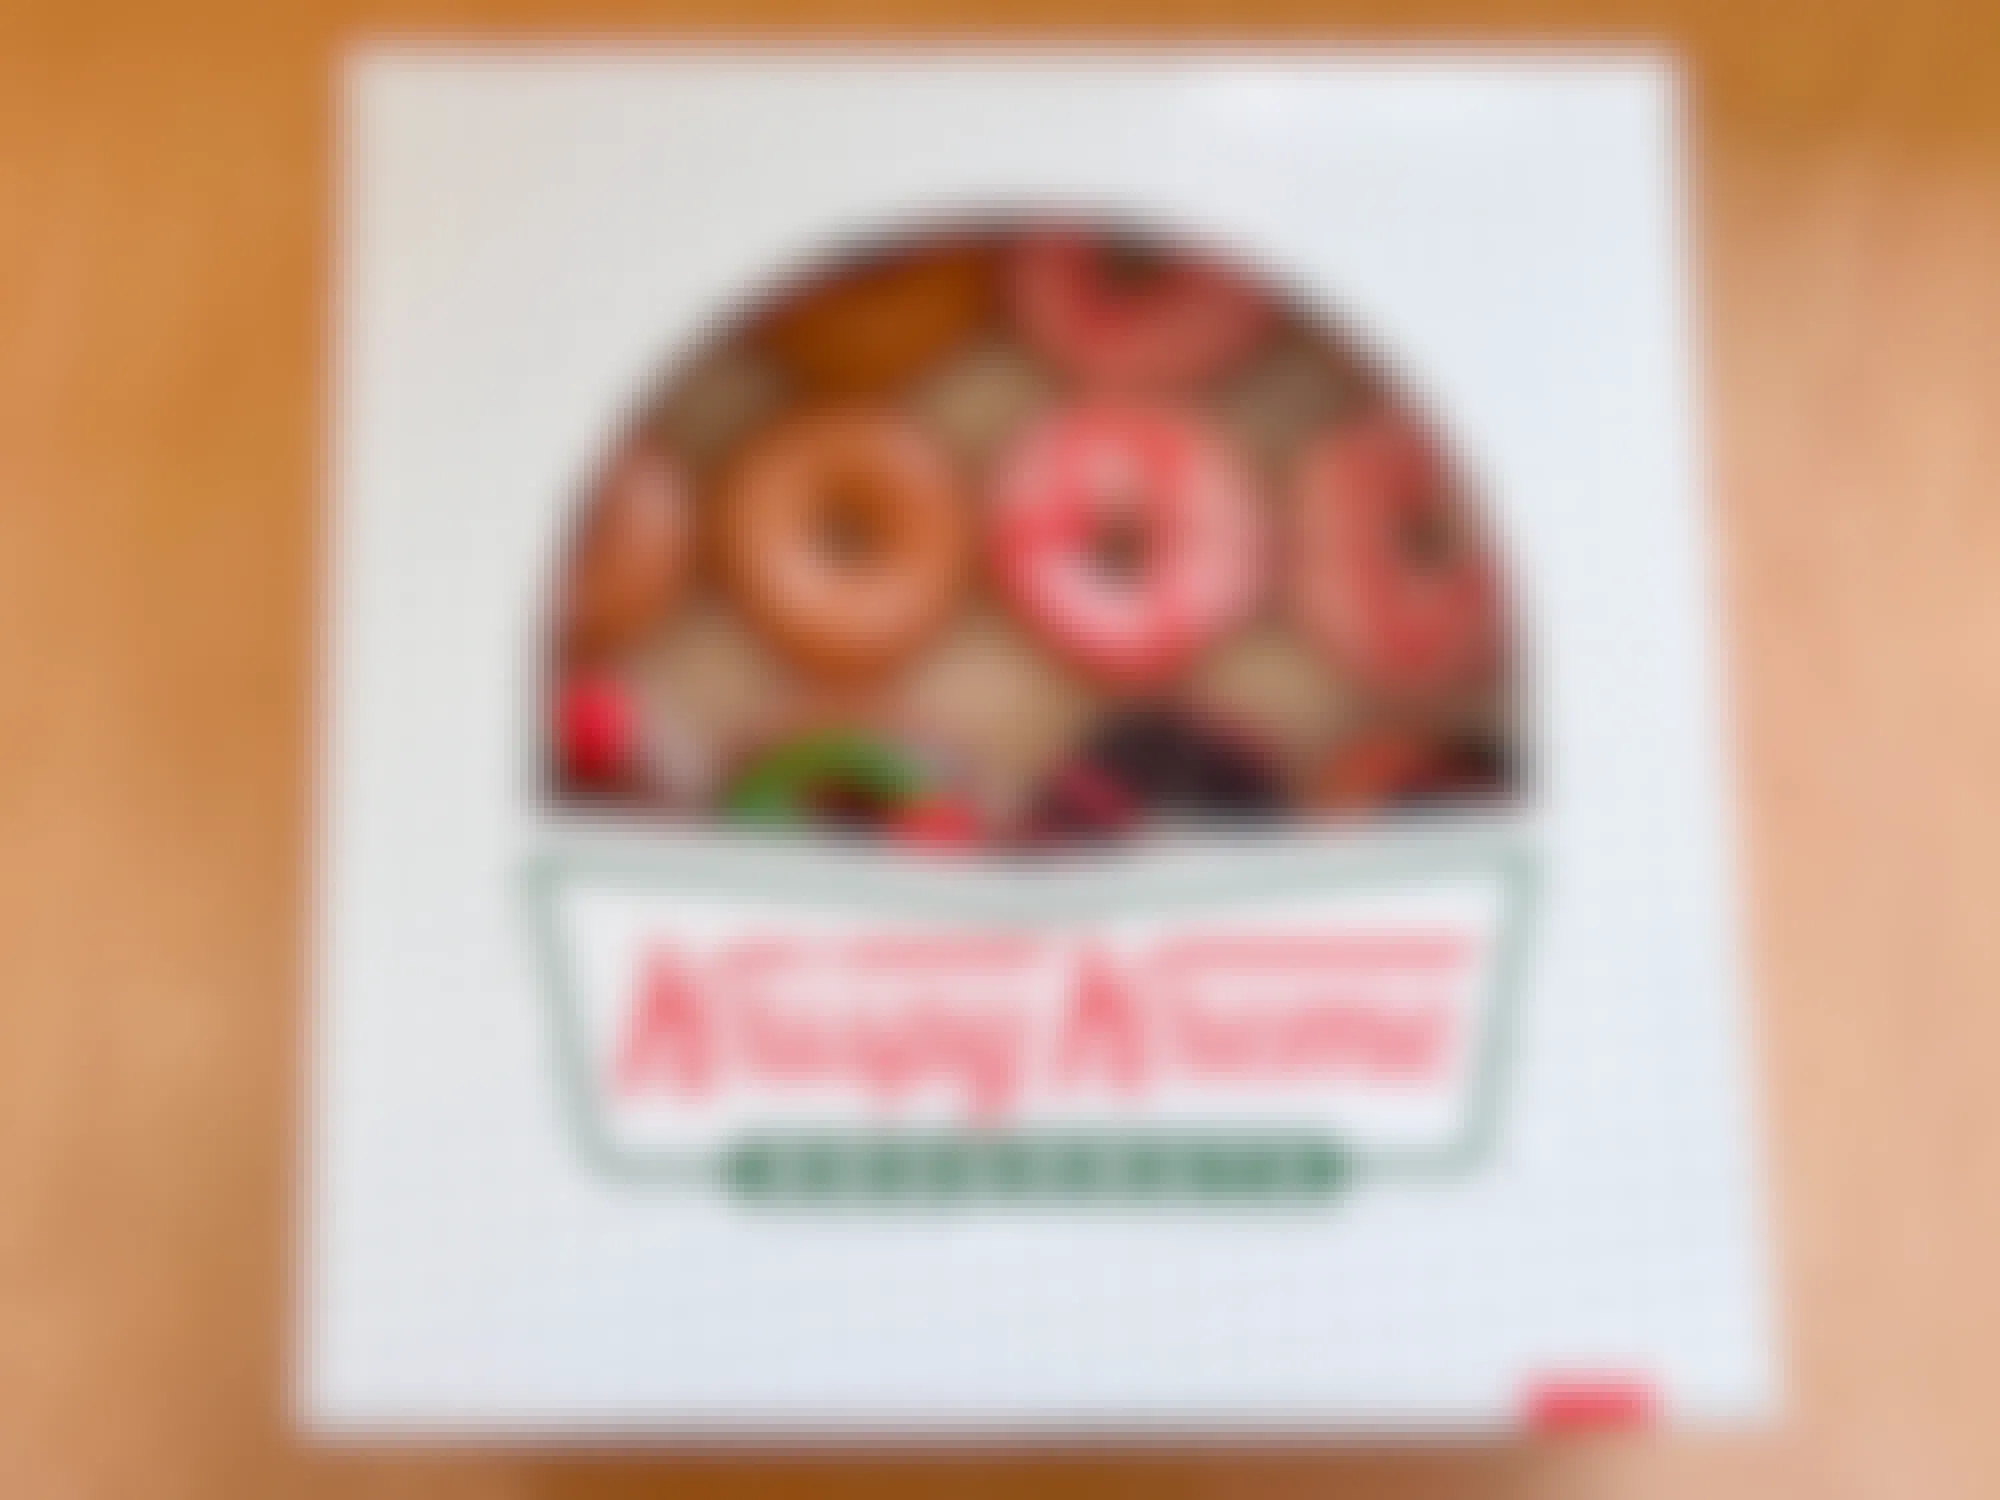 A box of Mother's Day Krispy Kreme doughnuts